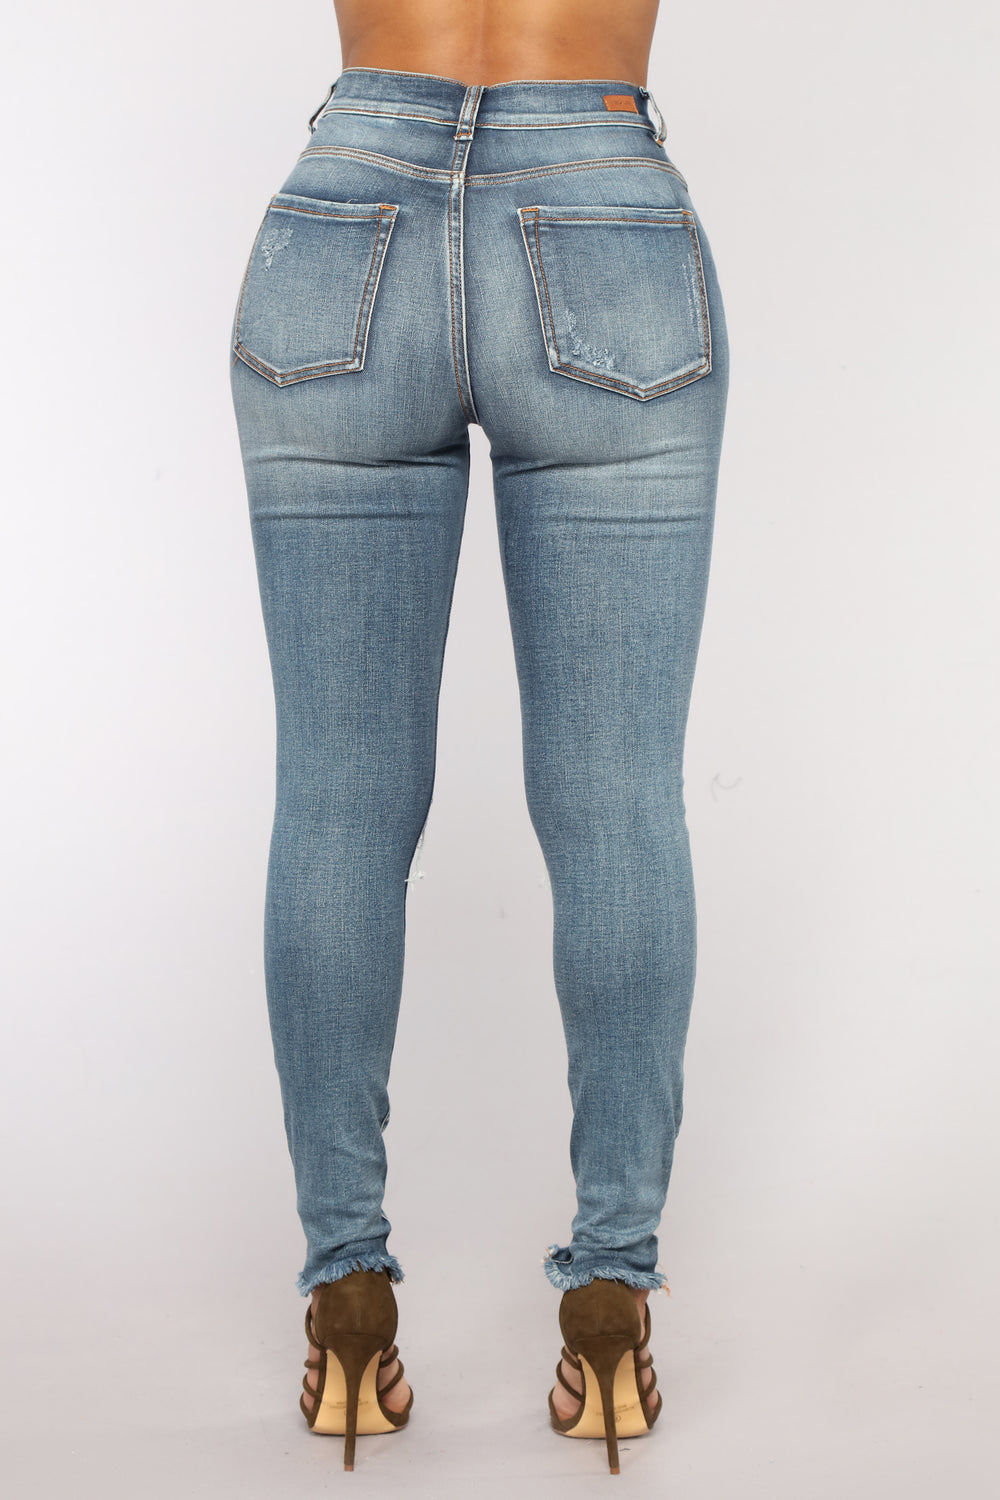 Snapshot Skinny Jeans - Medium Blue Wash